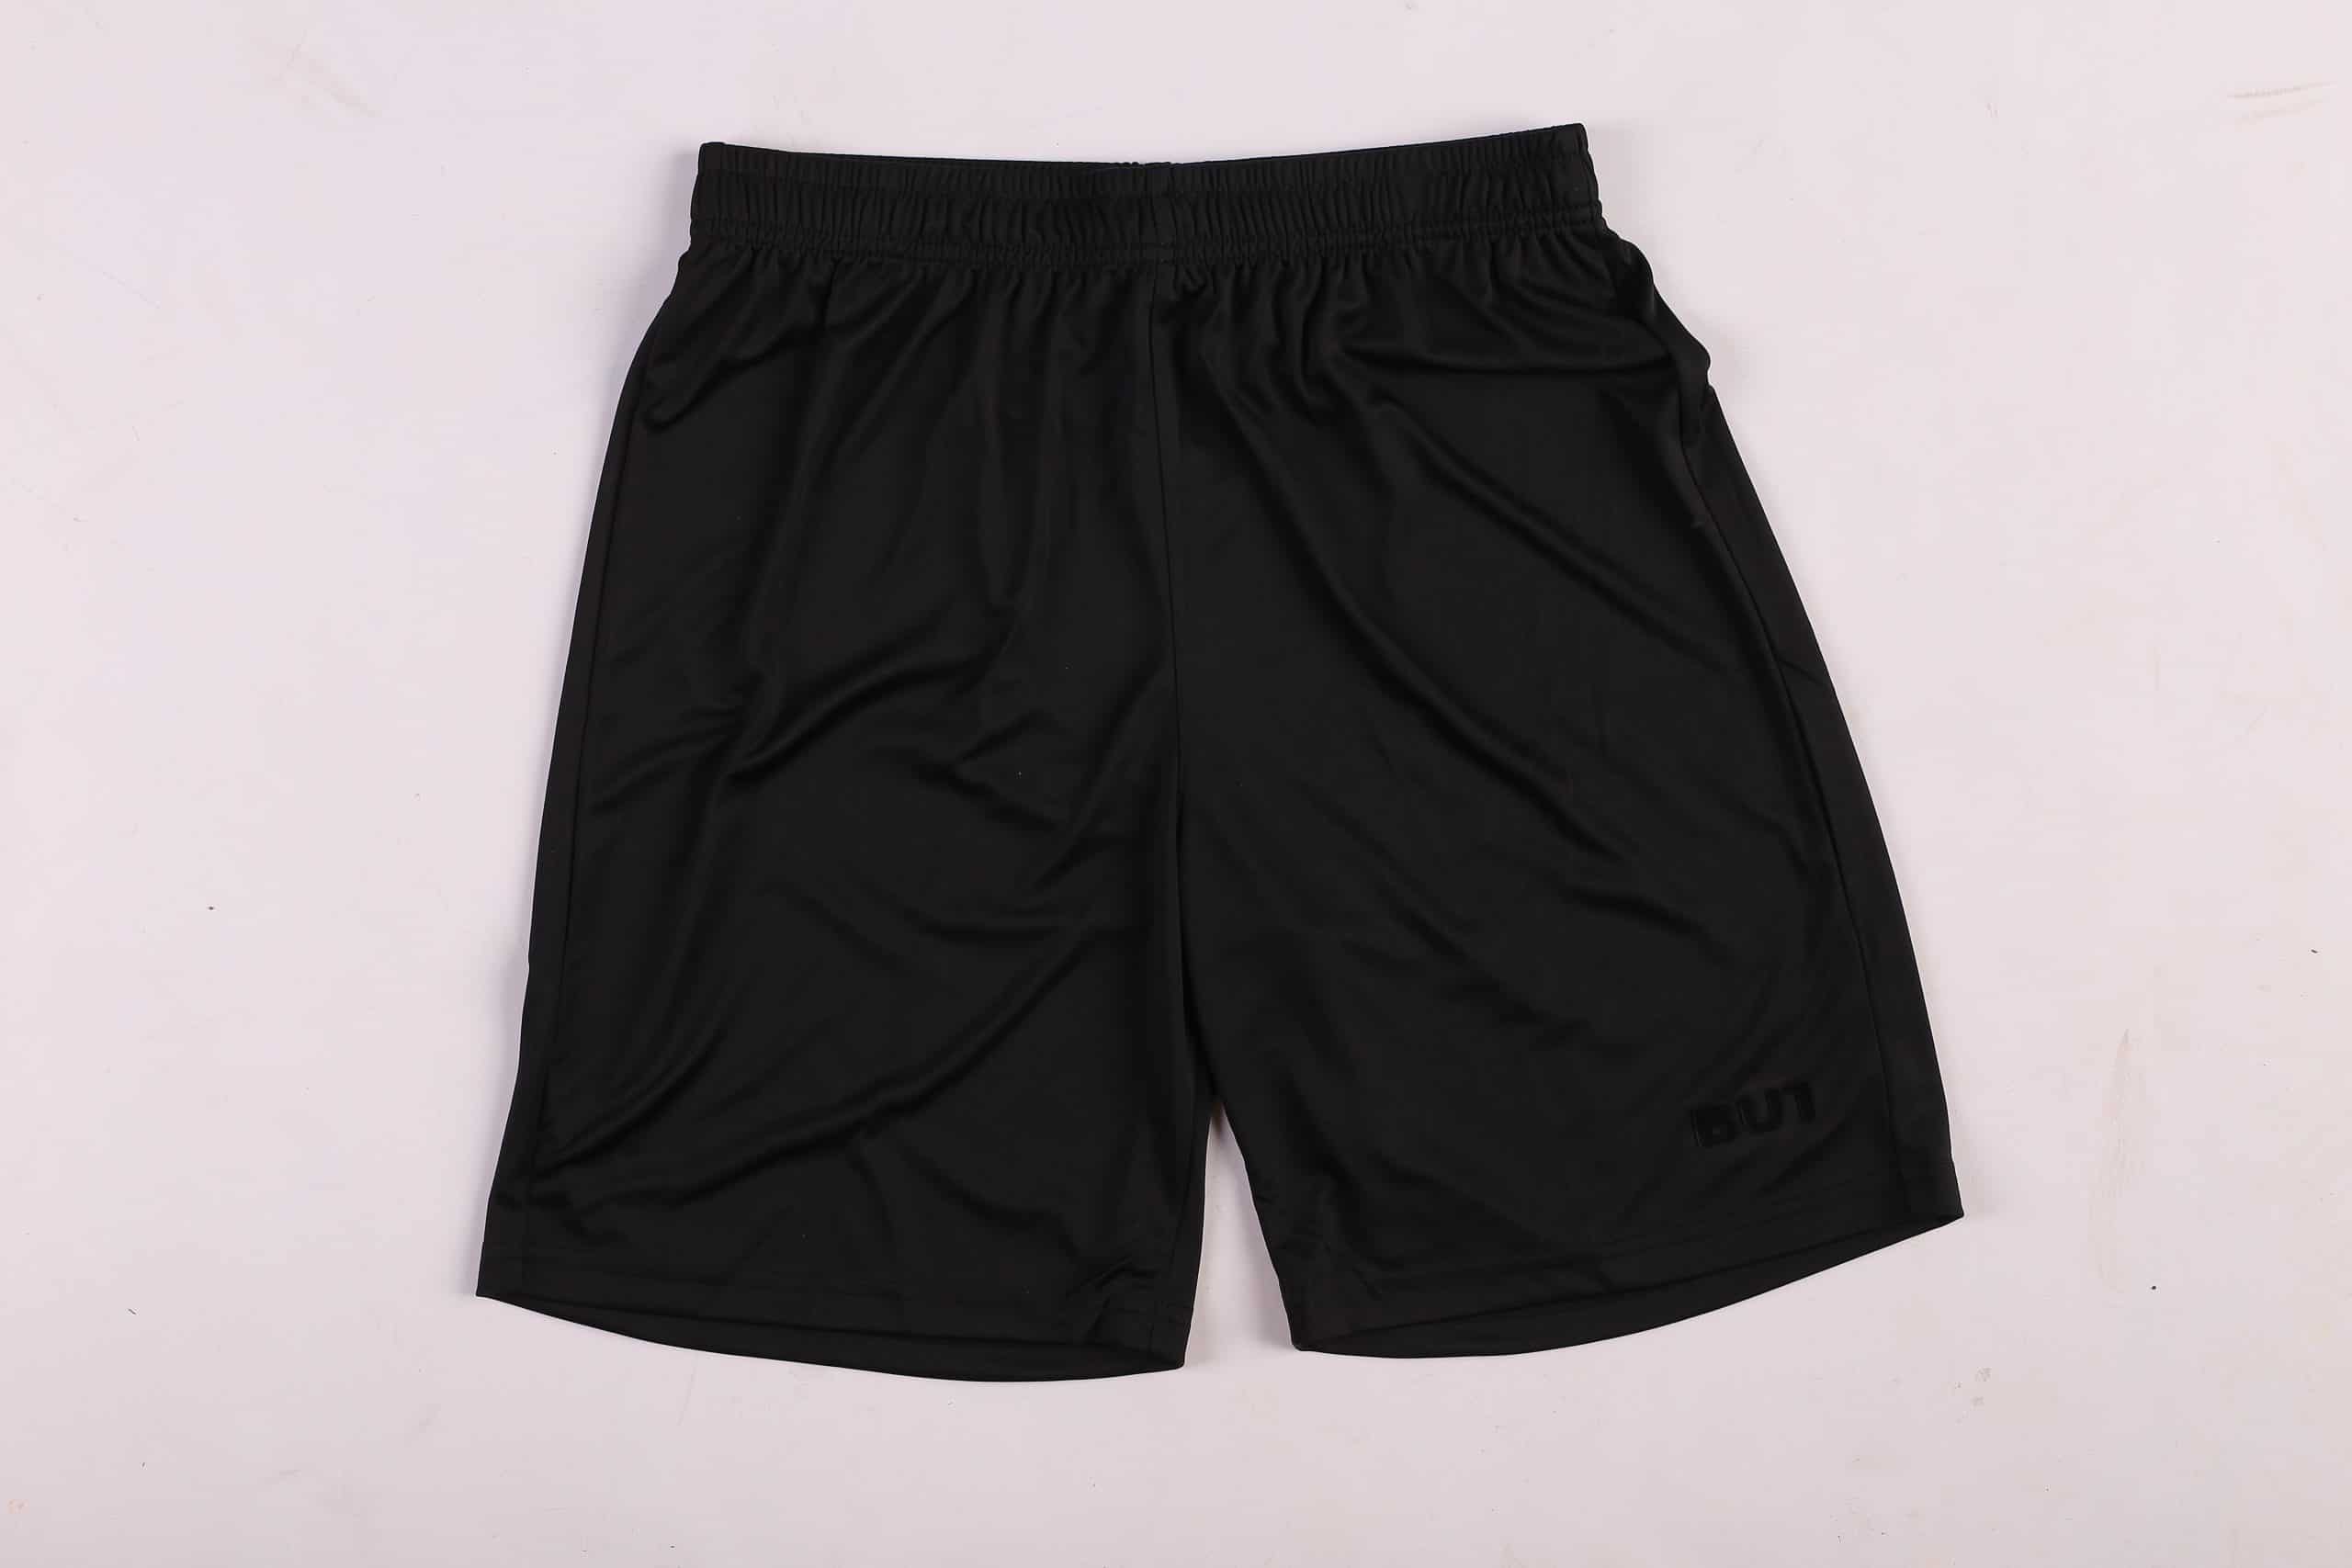 BU1 shorts 20 black